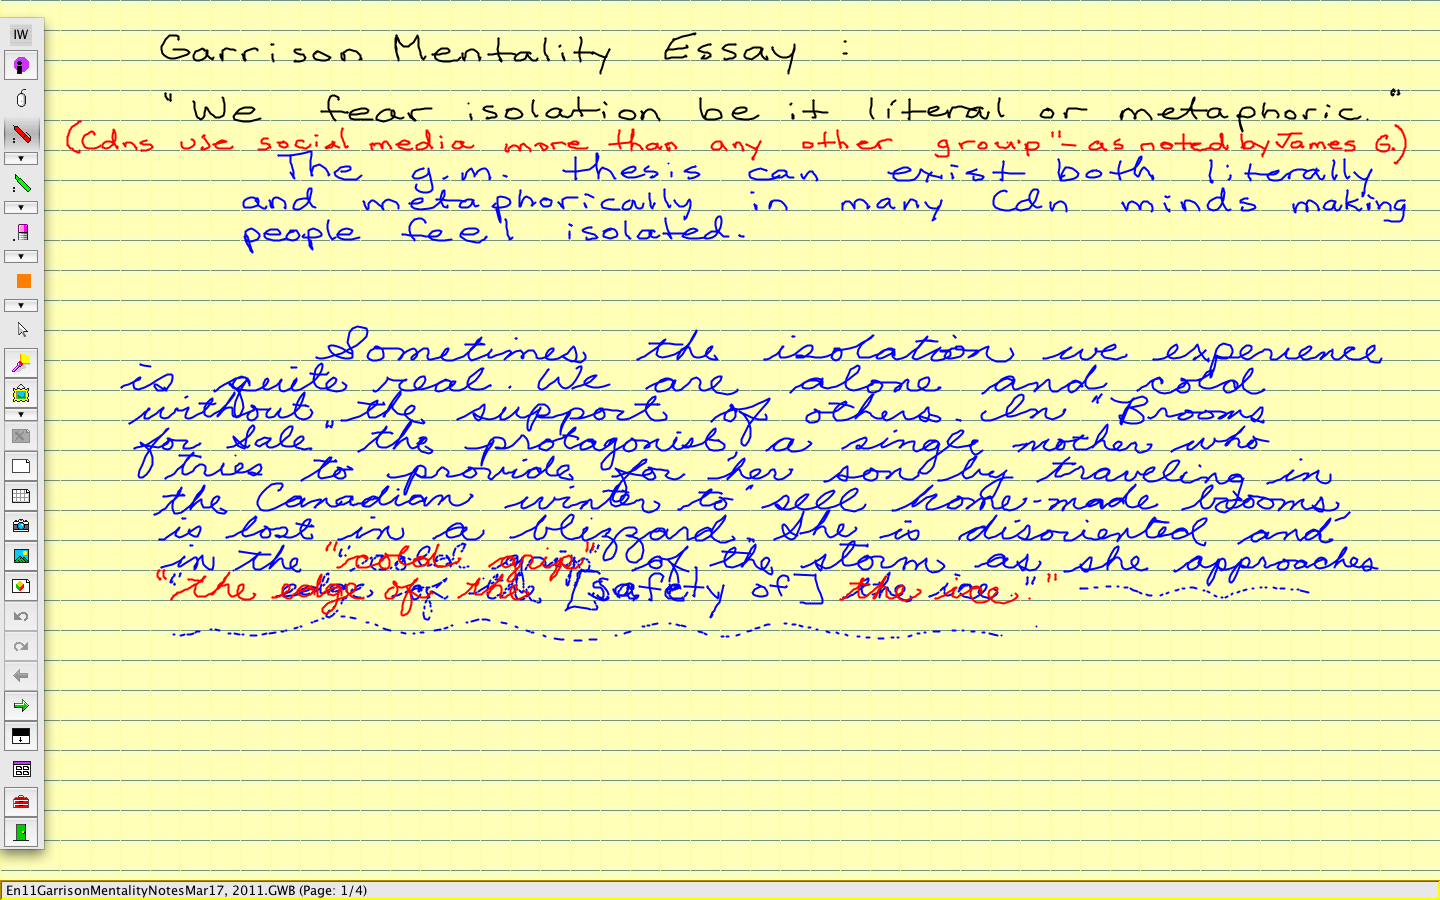 essay on yellow paper